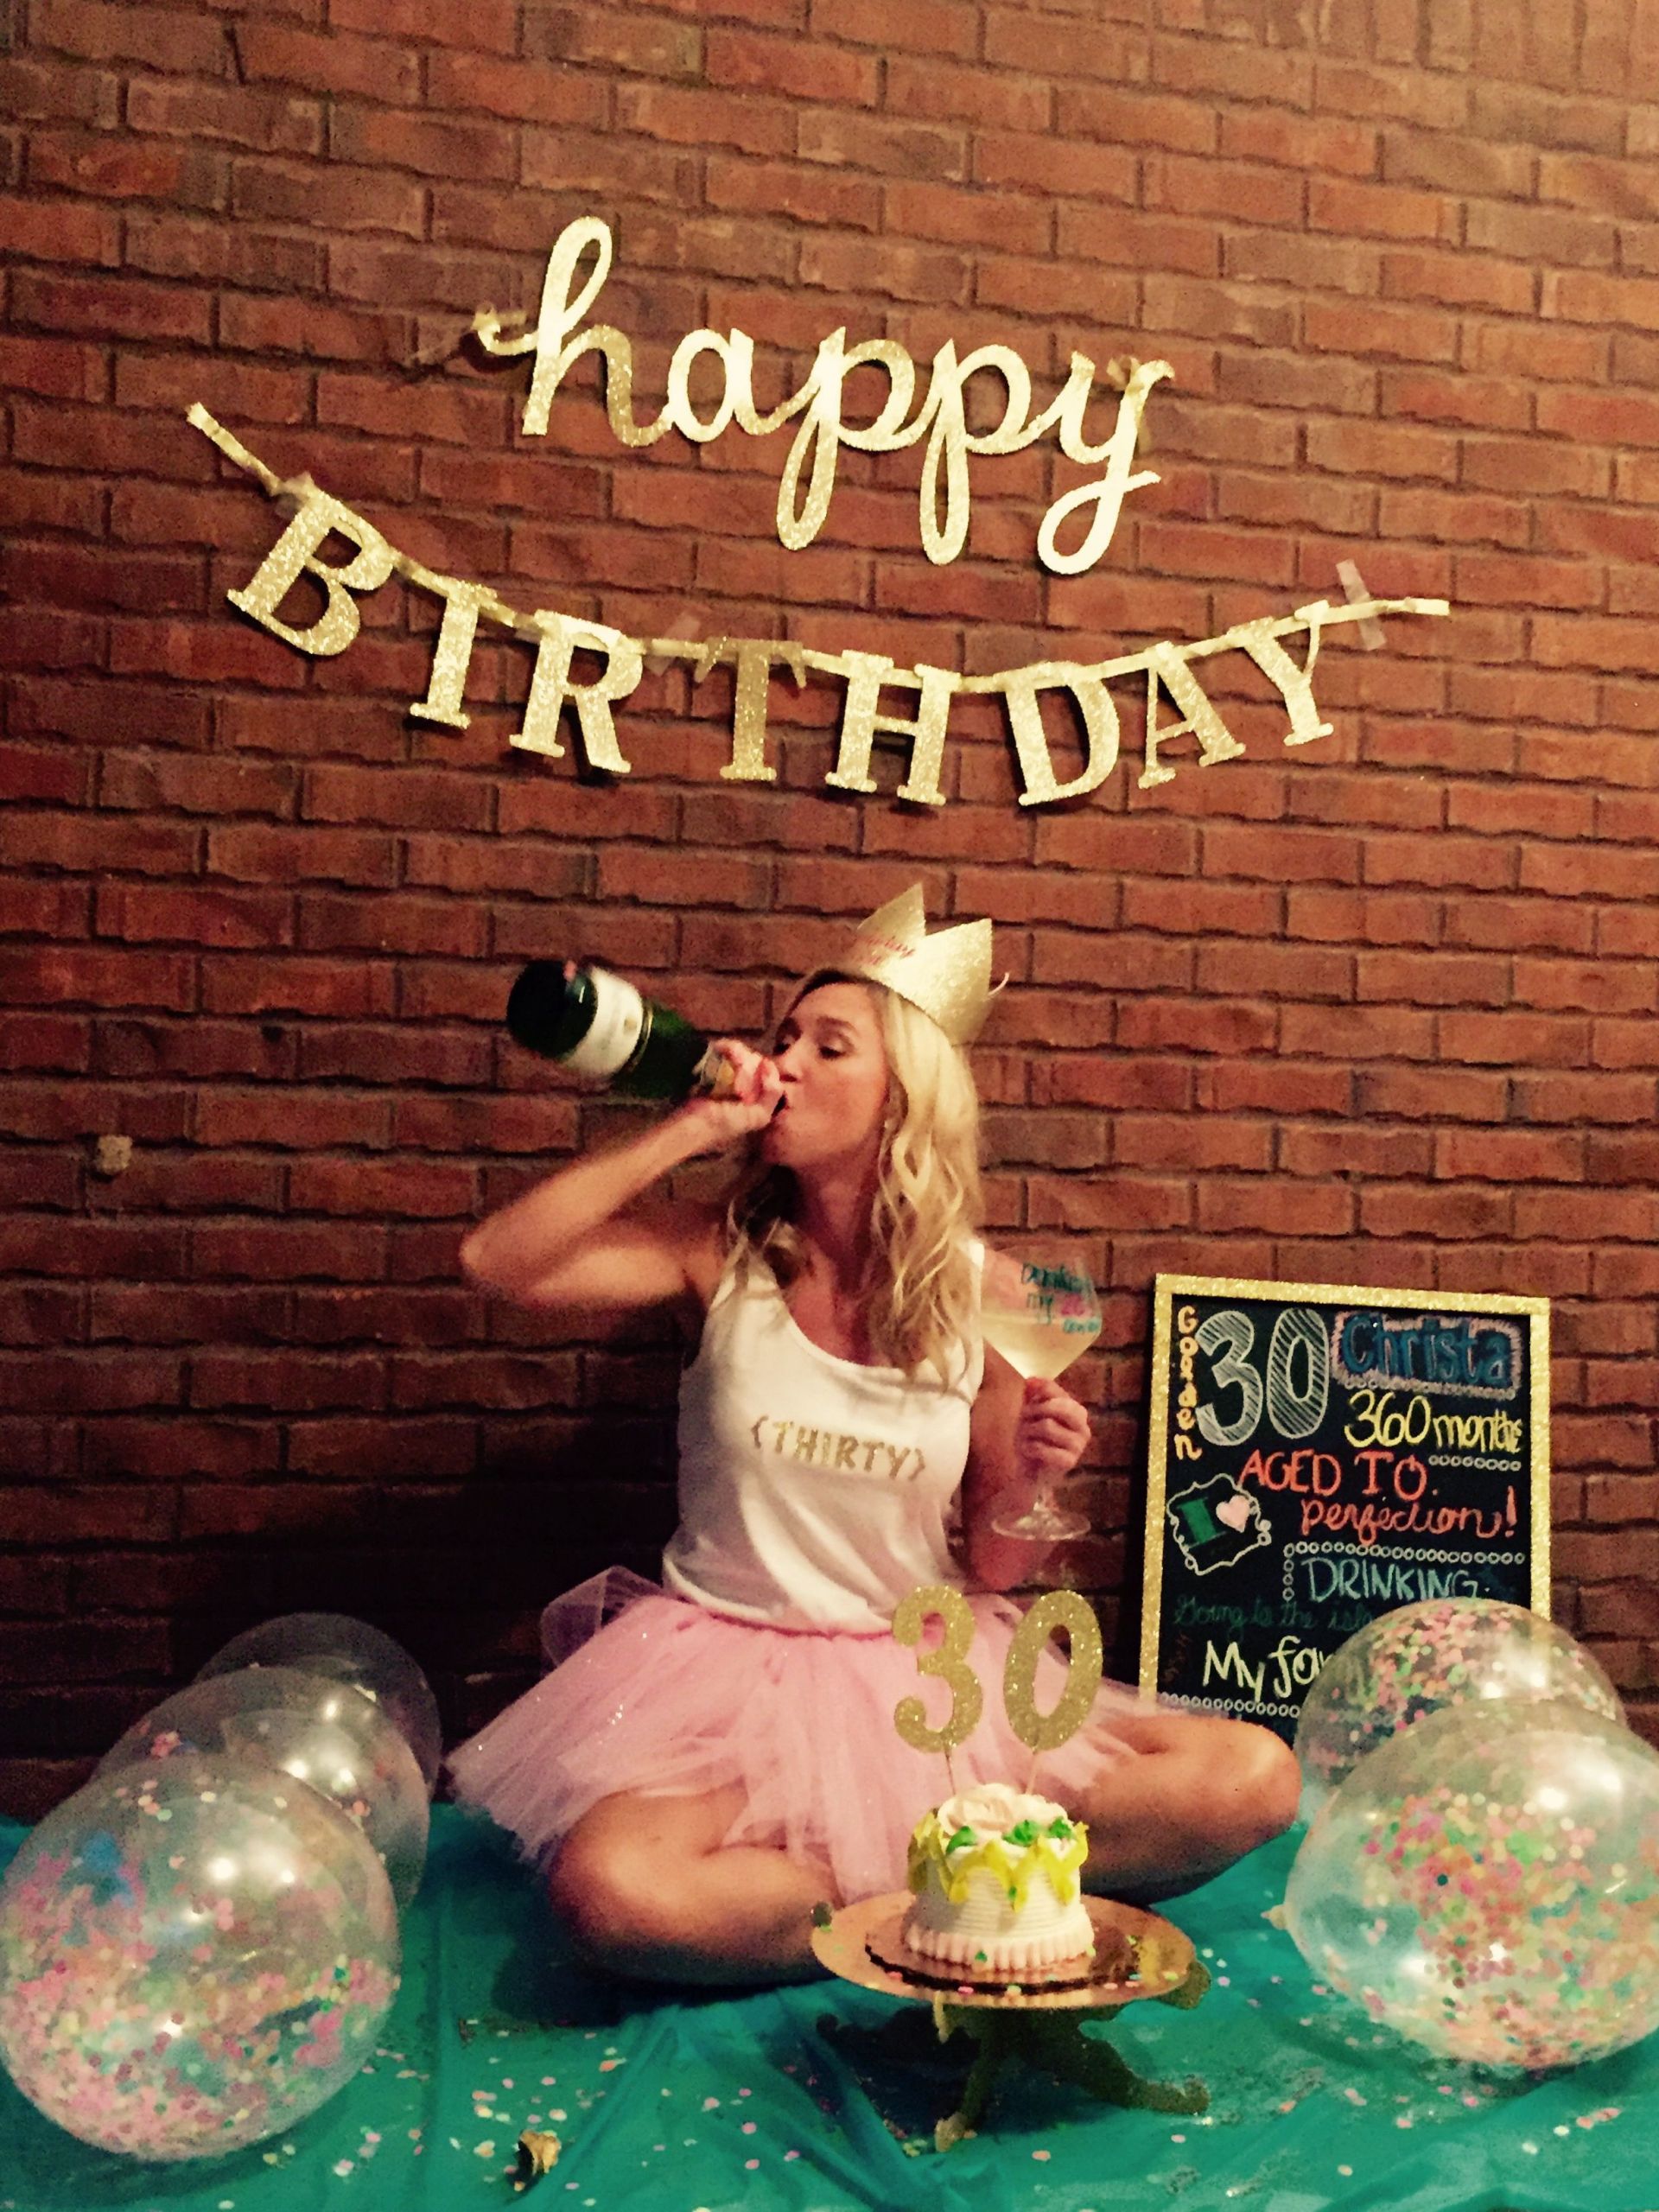 Fun Adult Birthday Party Ideas
 30th Birthday smash cake and booze photo shoot Drinking